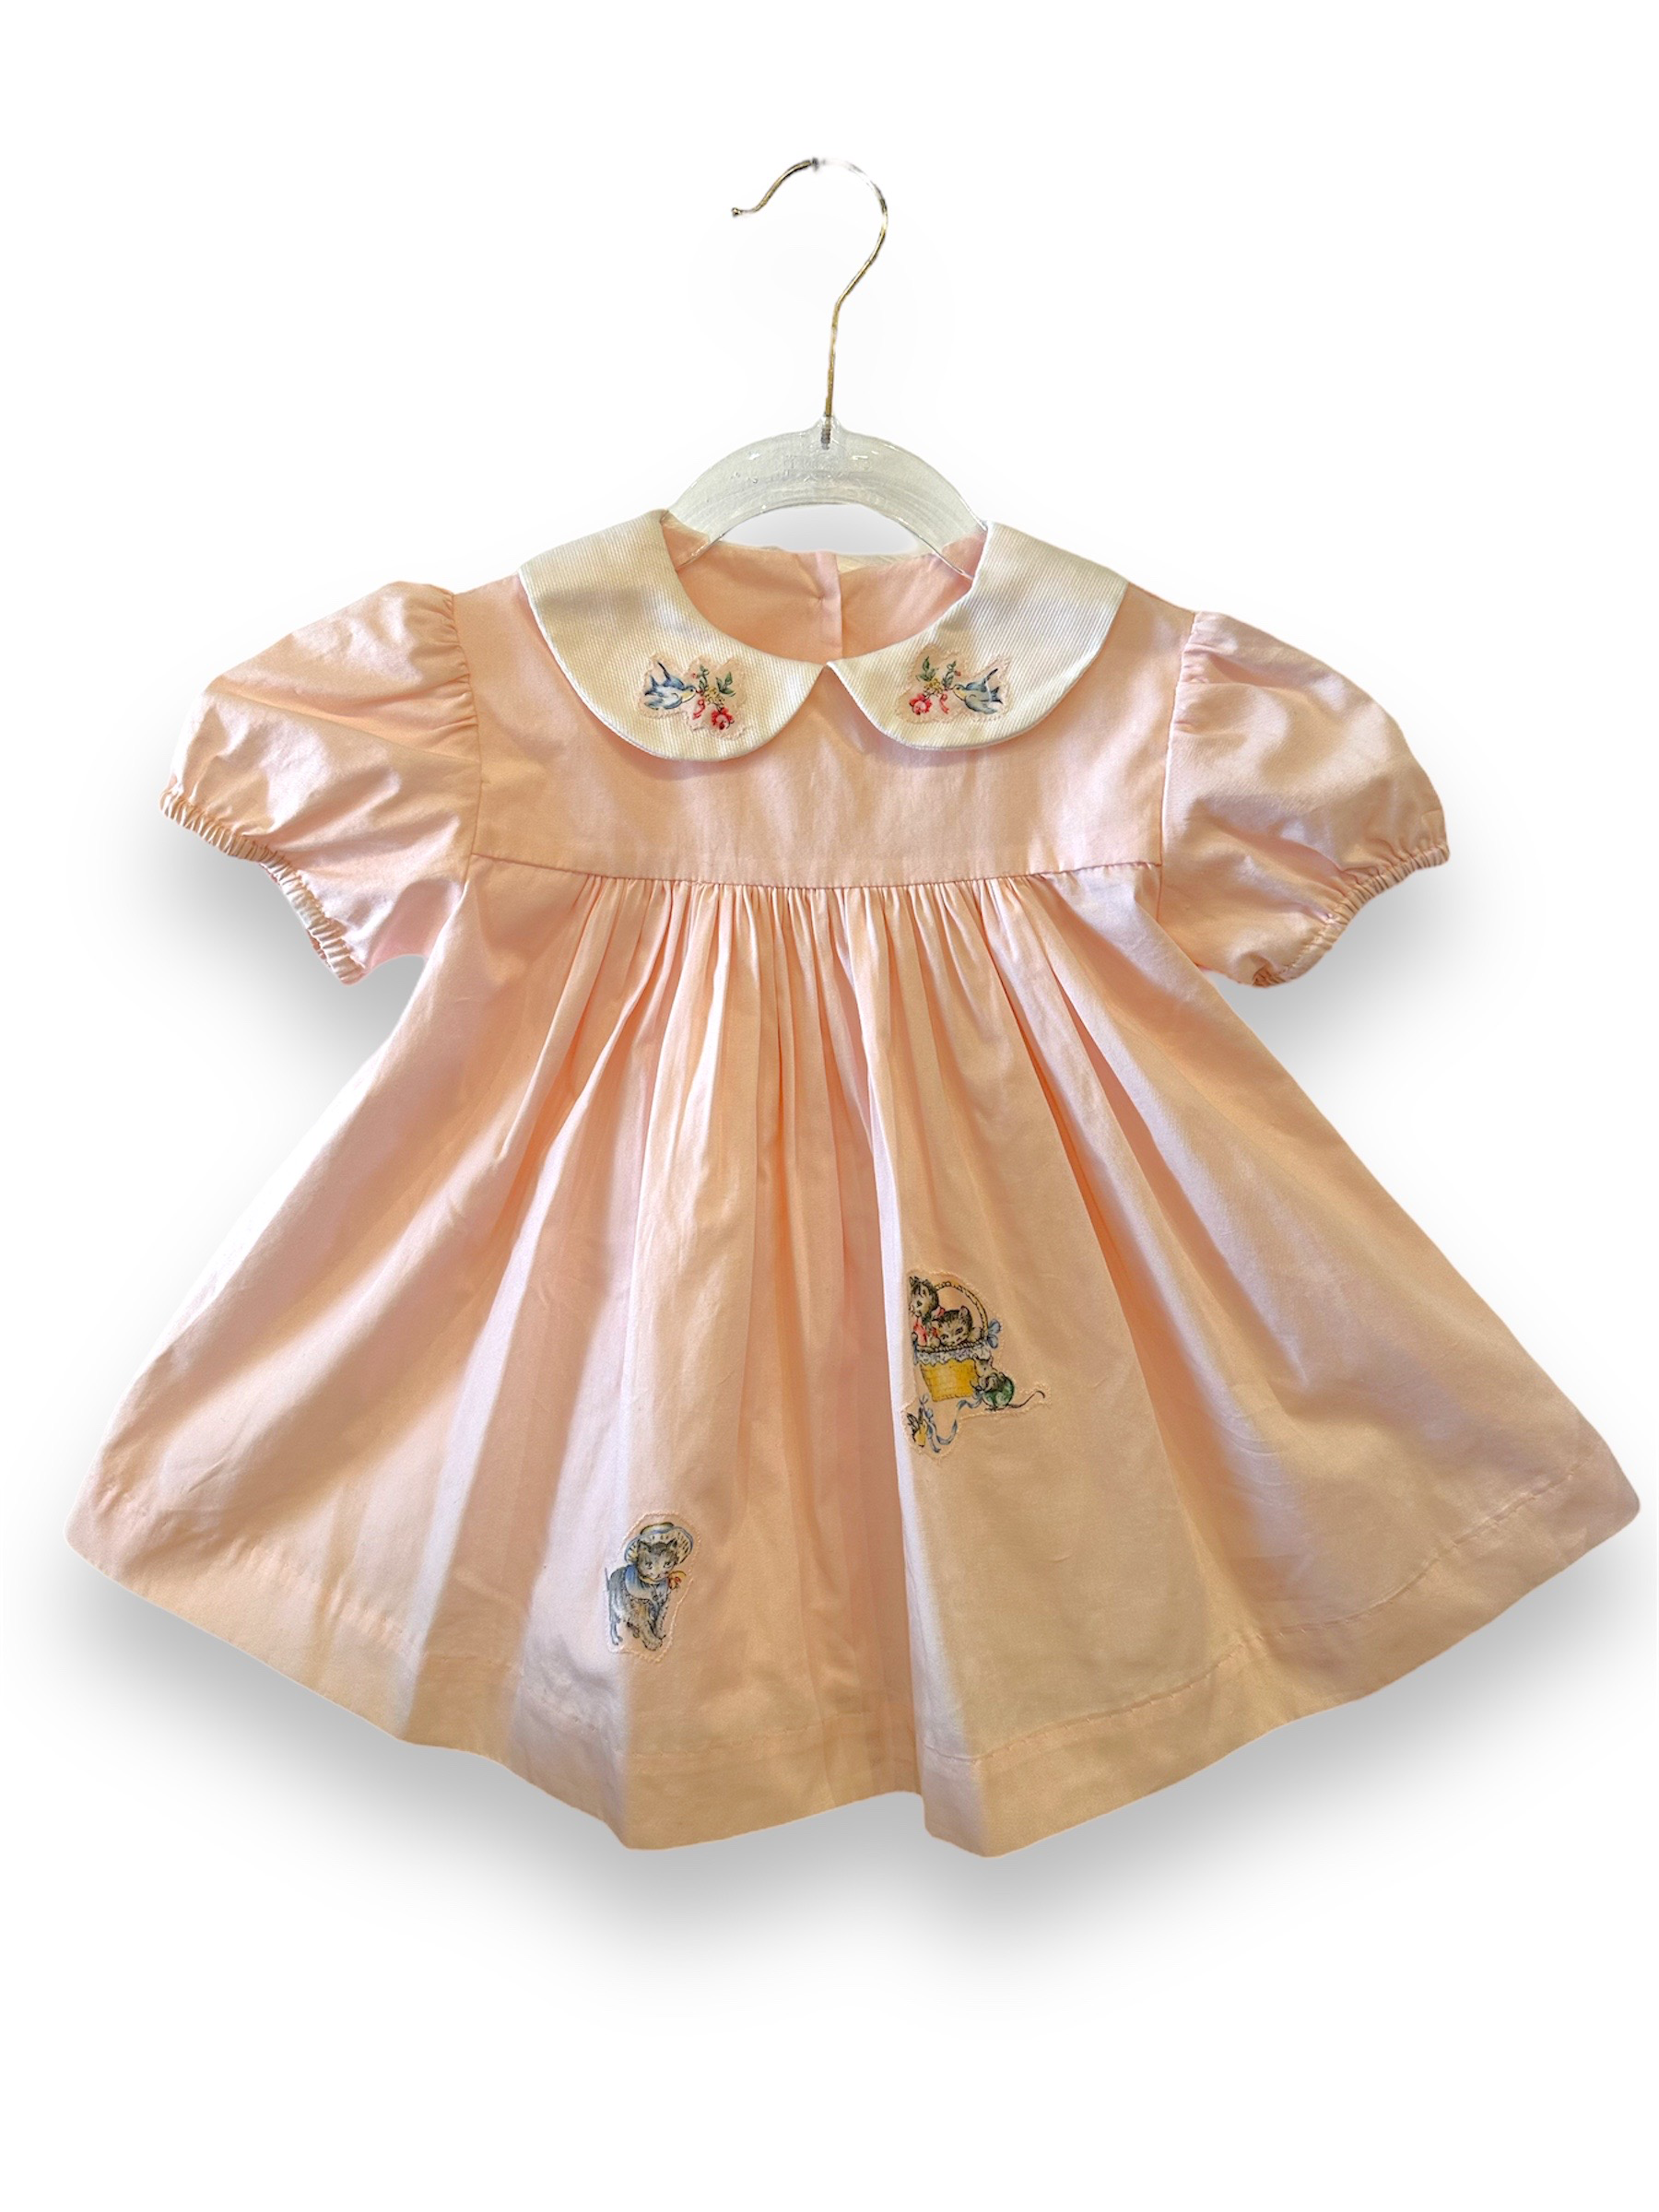 Vintage Valerie Byrnes 1980's Pink Peter Pan Collar Dress with Kitty Design Appliqué